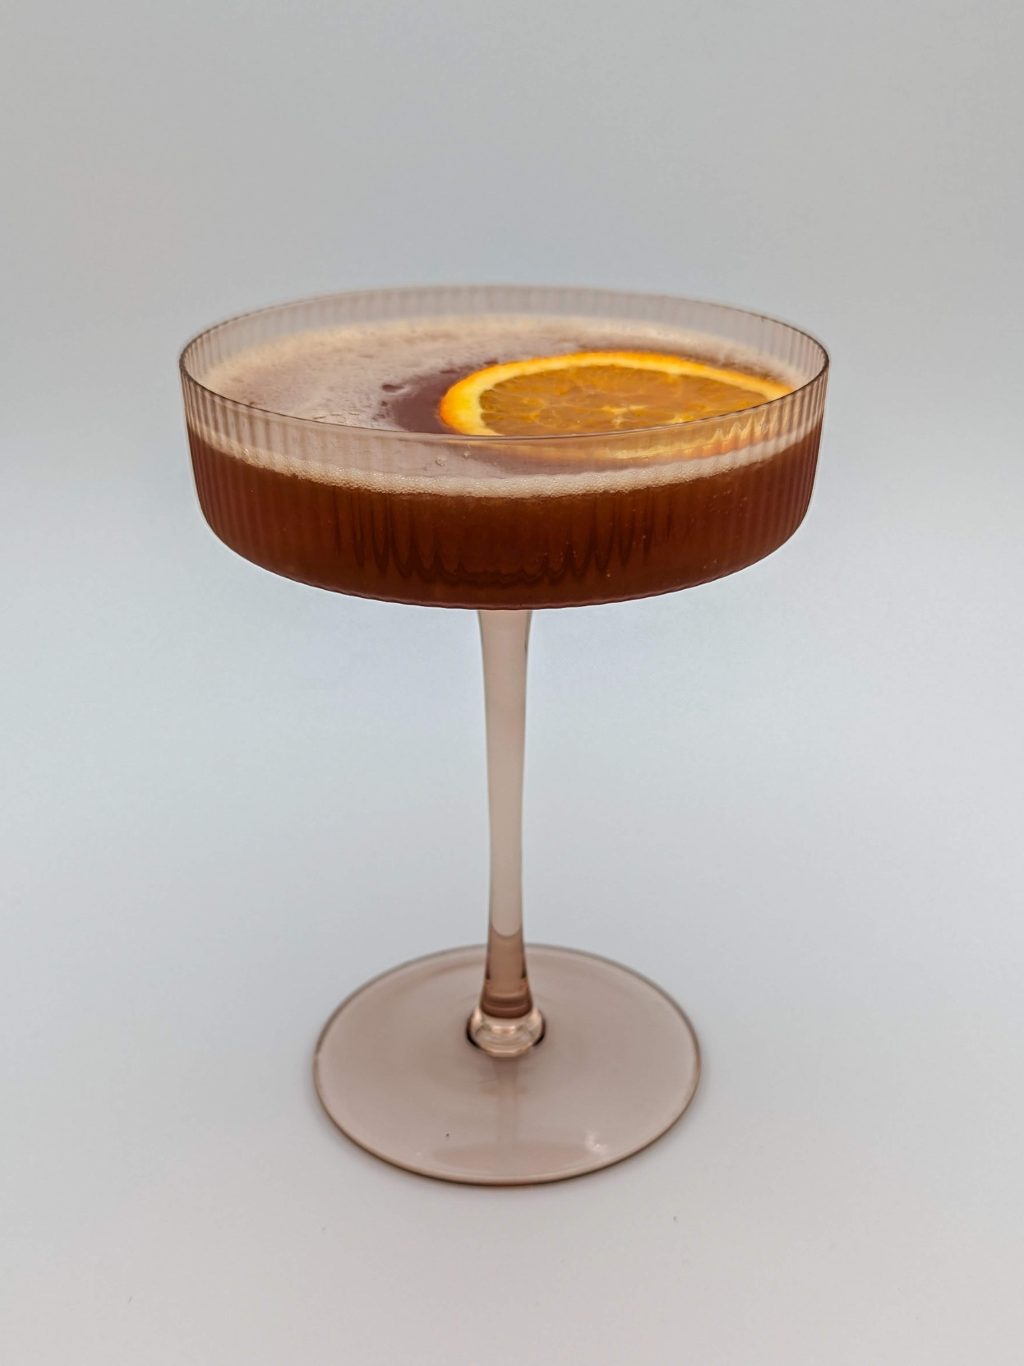 Reddish brown liquid in a martini glass with a orange wheel garnish